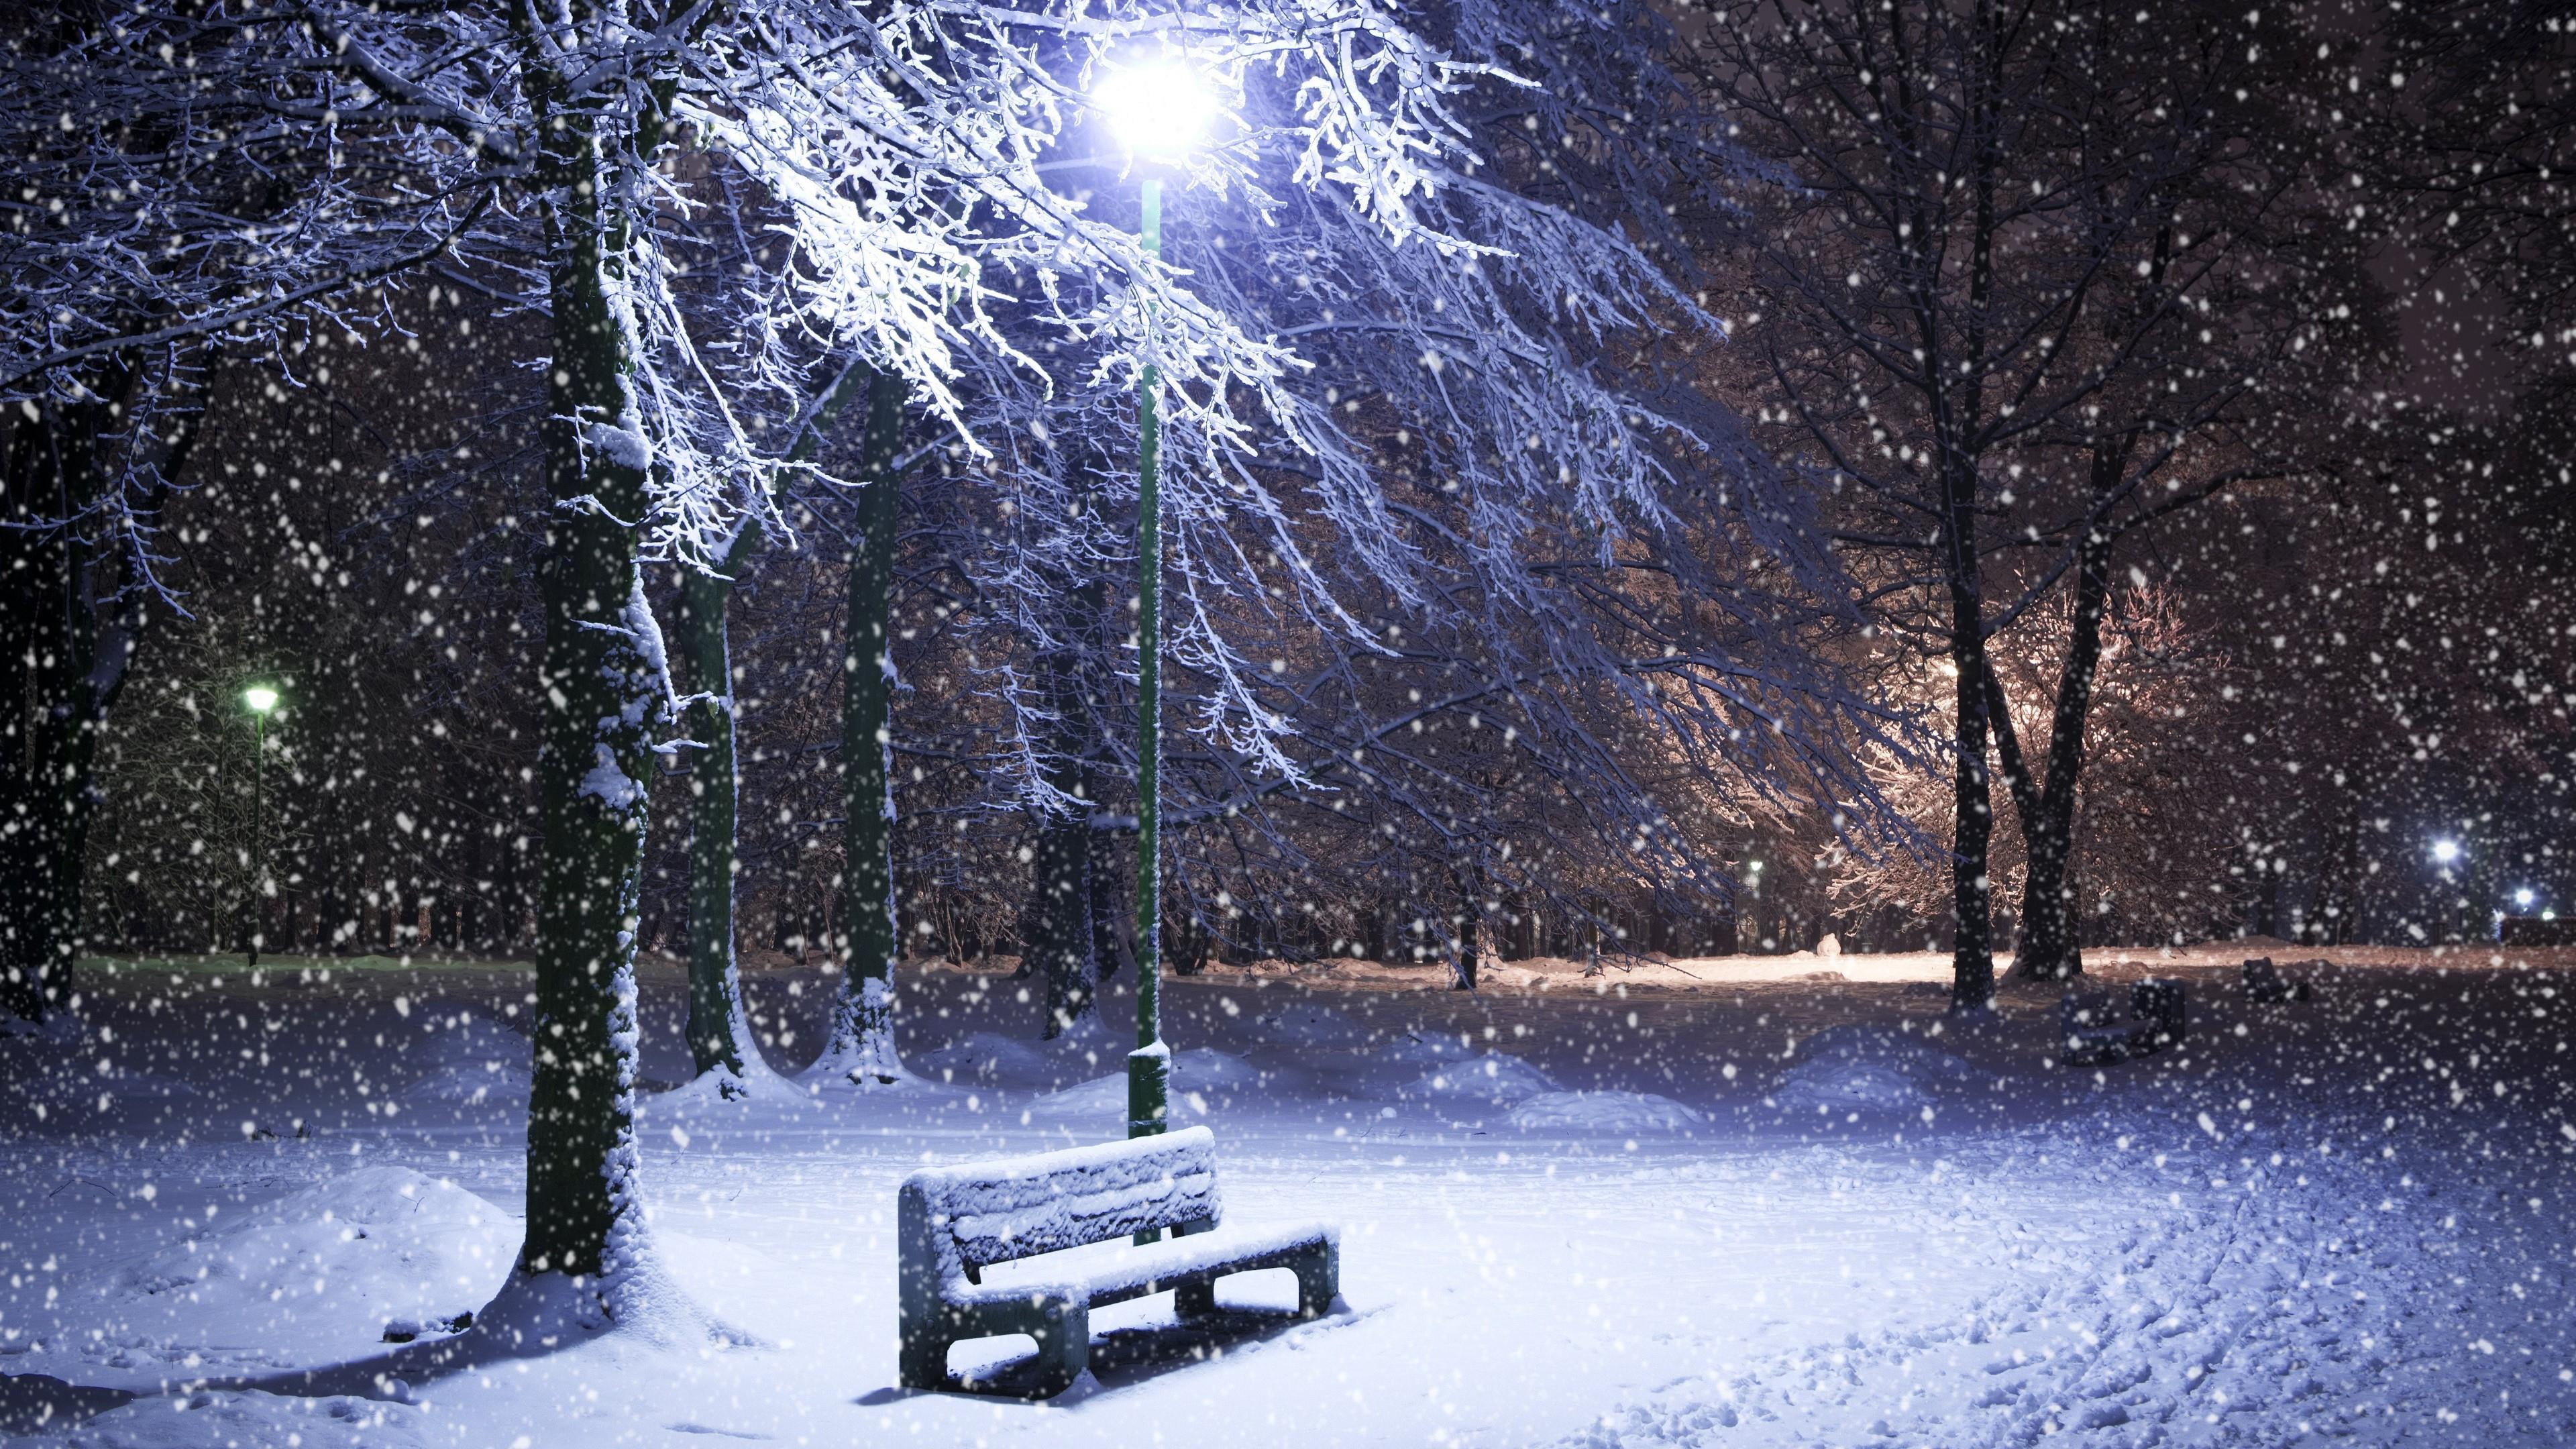 bench, winter, park, street light, snowfall, street lights